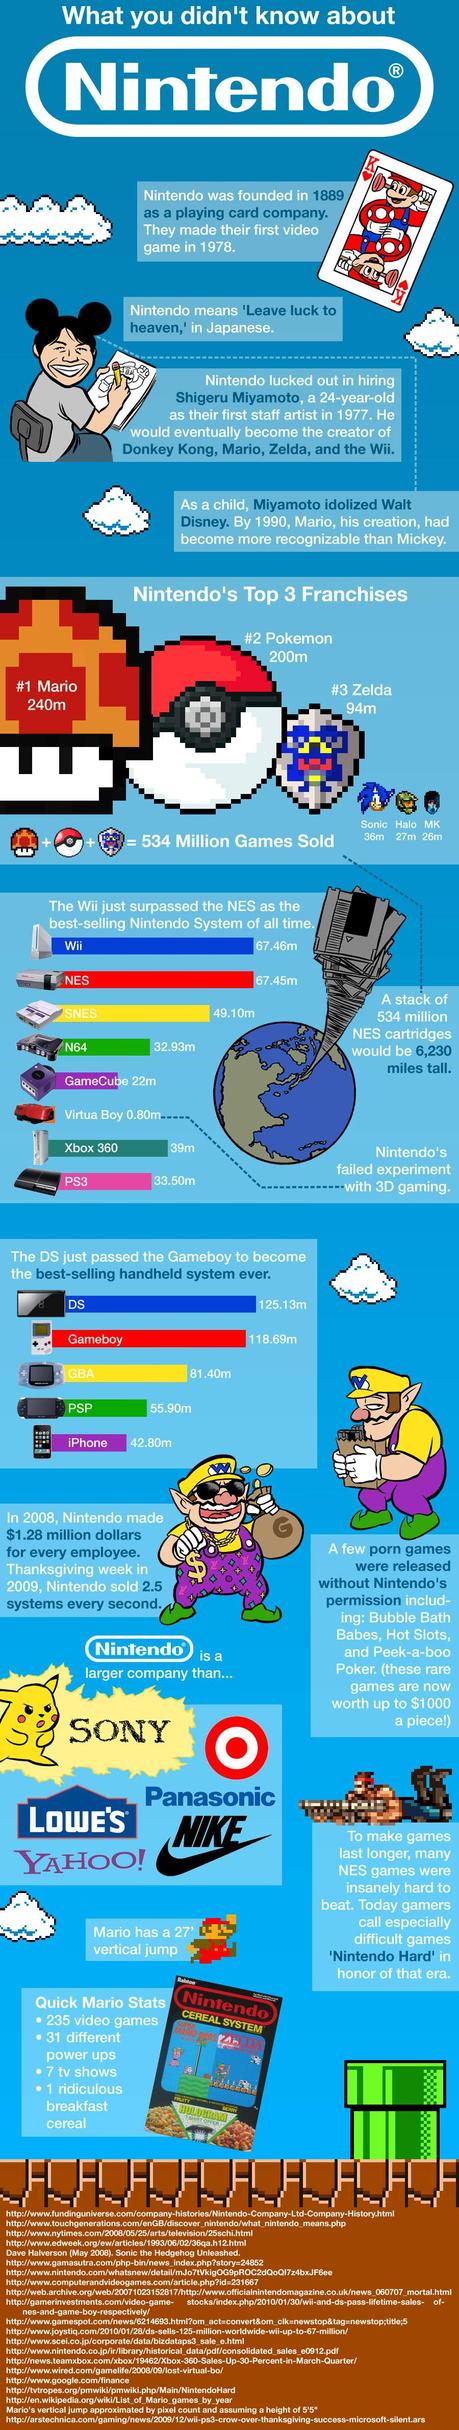 A Look at Nintendo